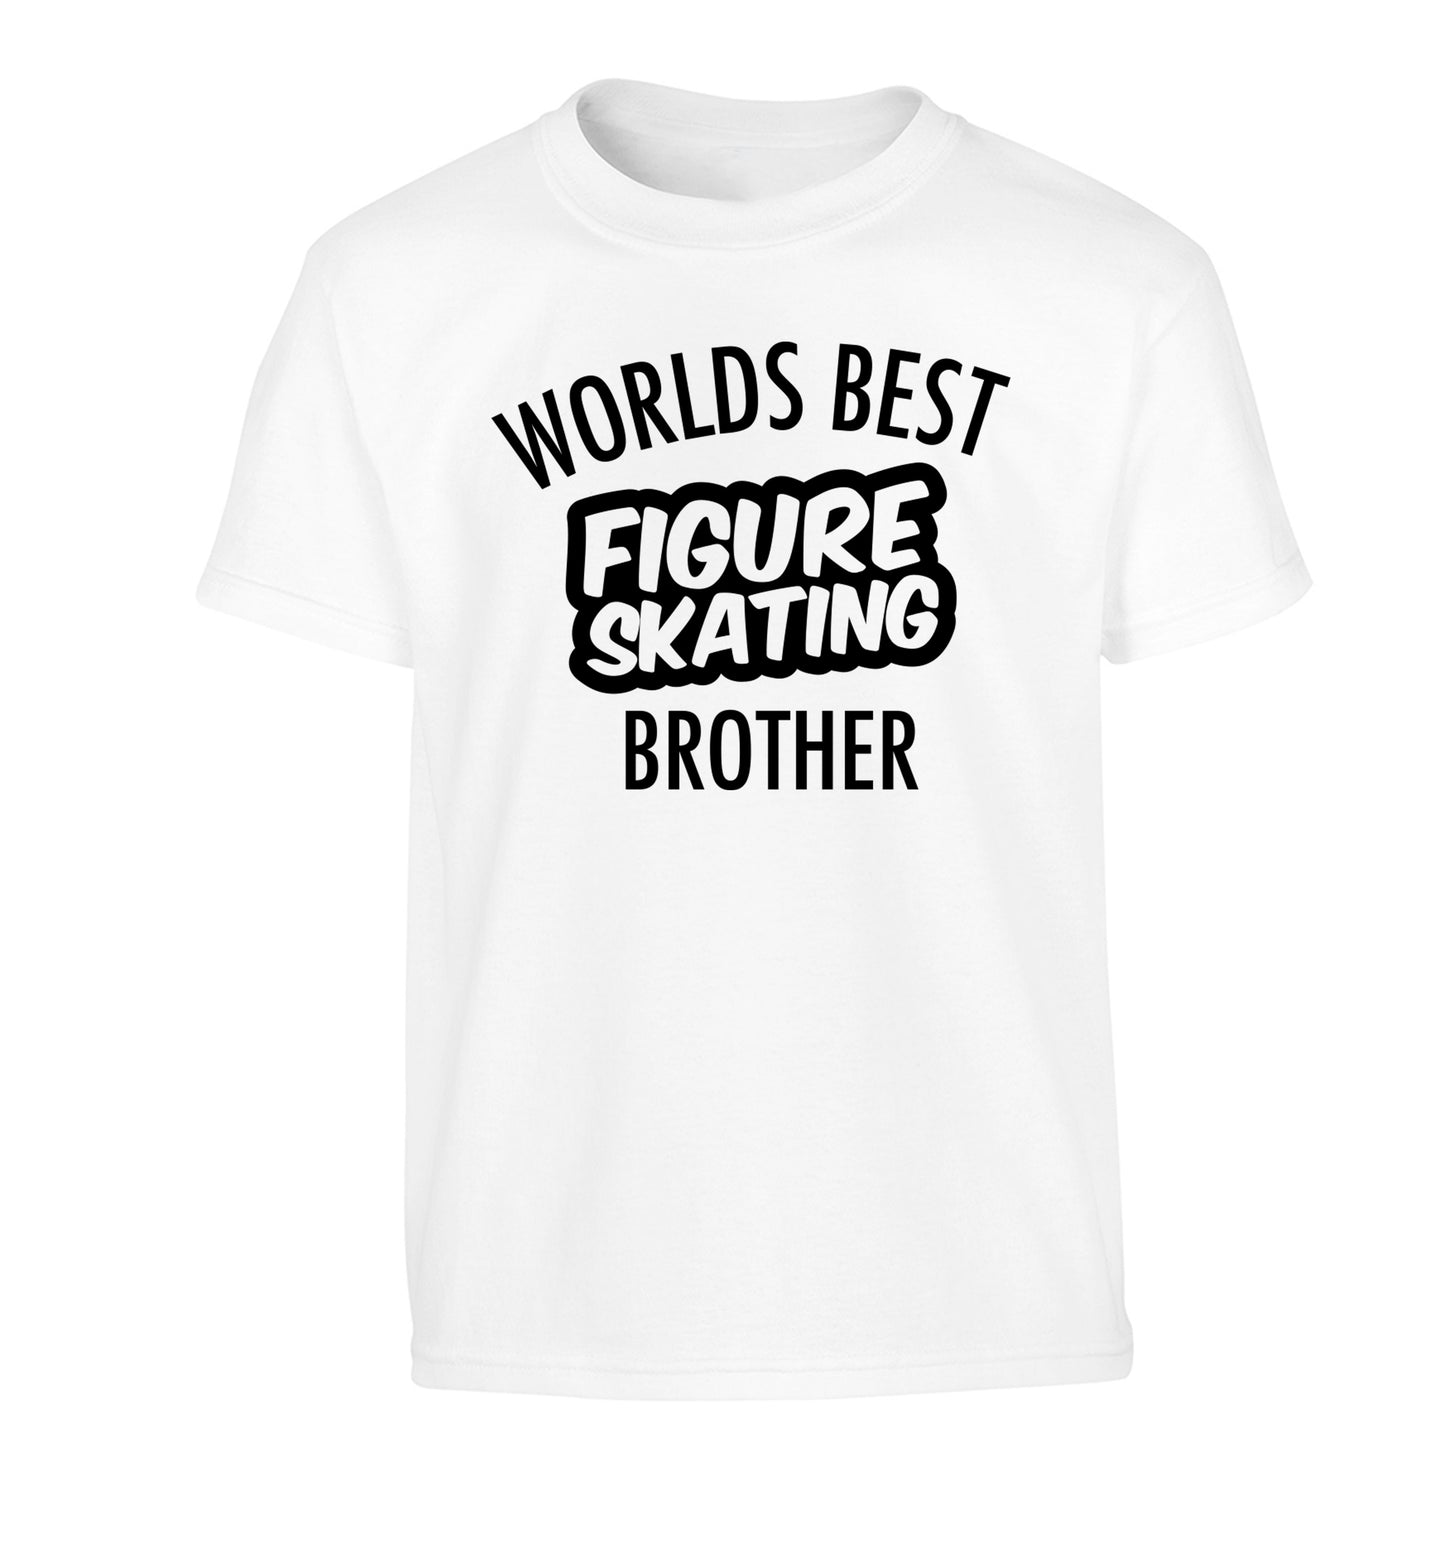 Worlds best figure skating brother Children's white Tshirt 12-14 Years